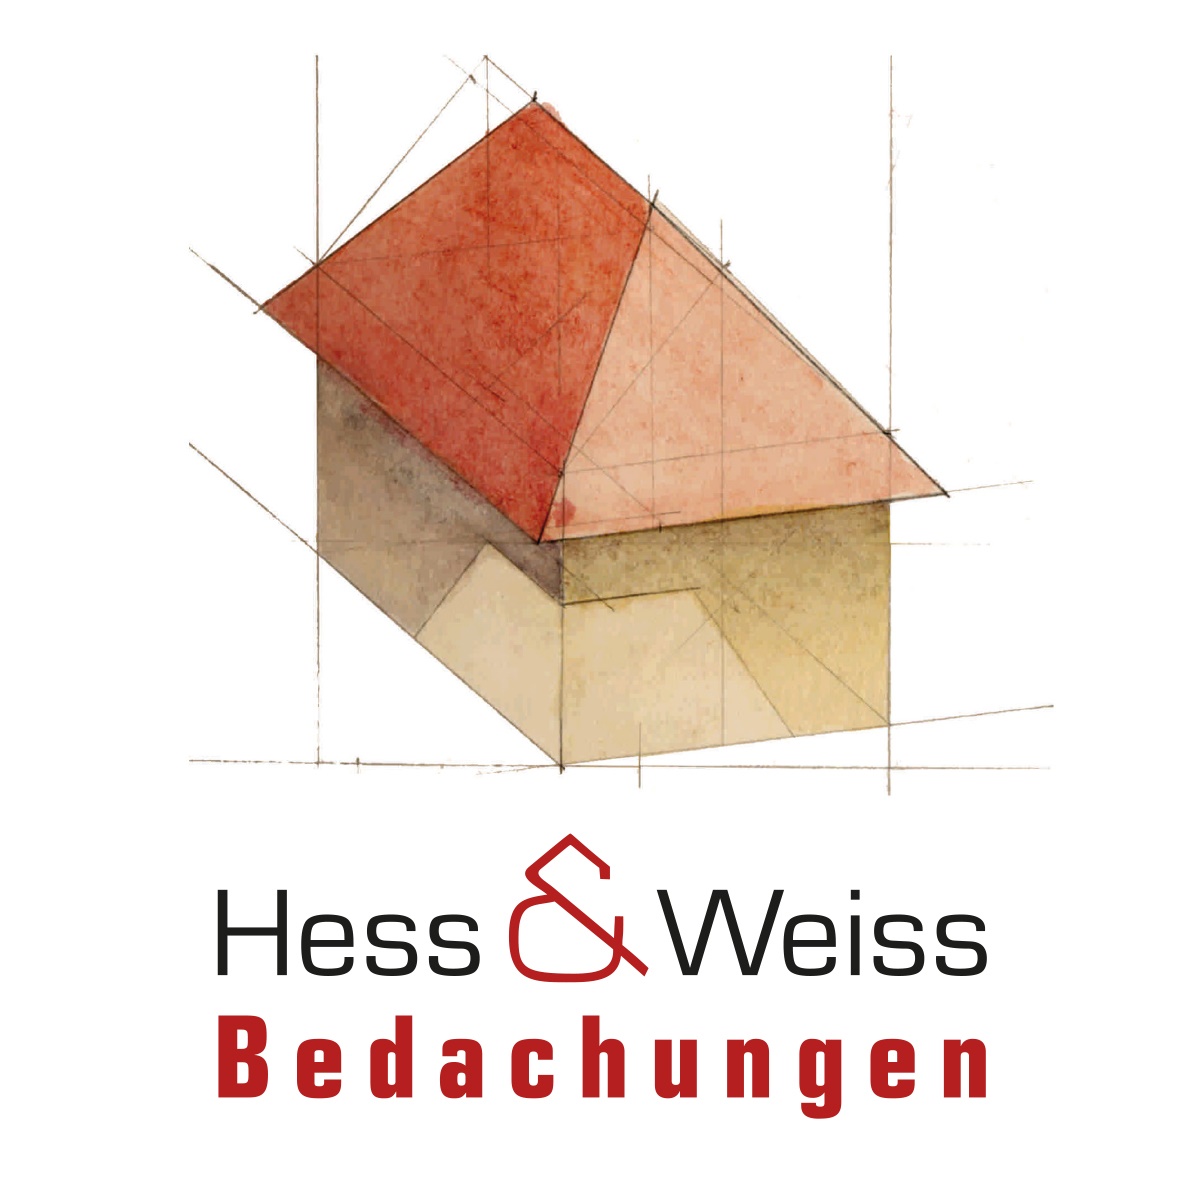 Hess & Weiss Bedachungen in Worms